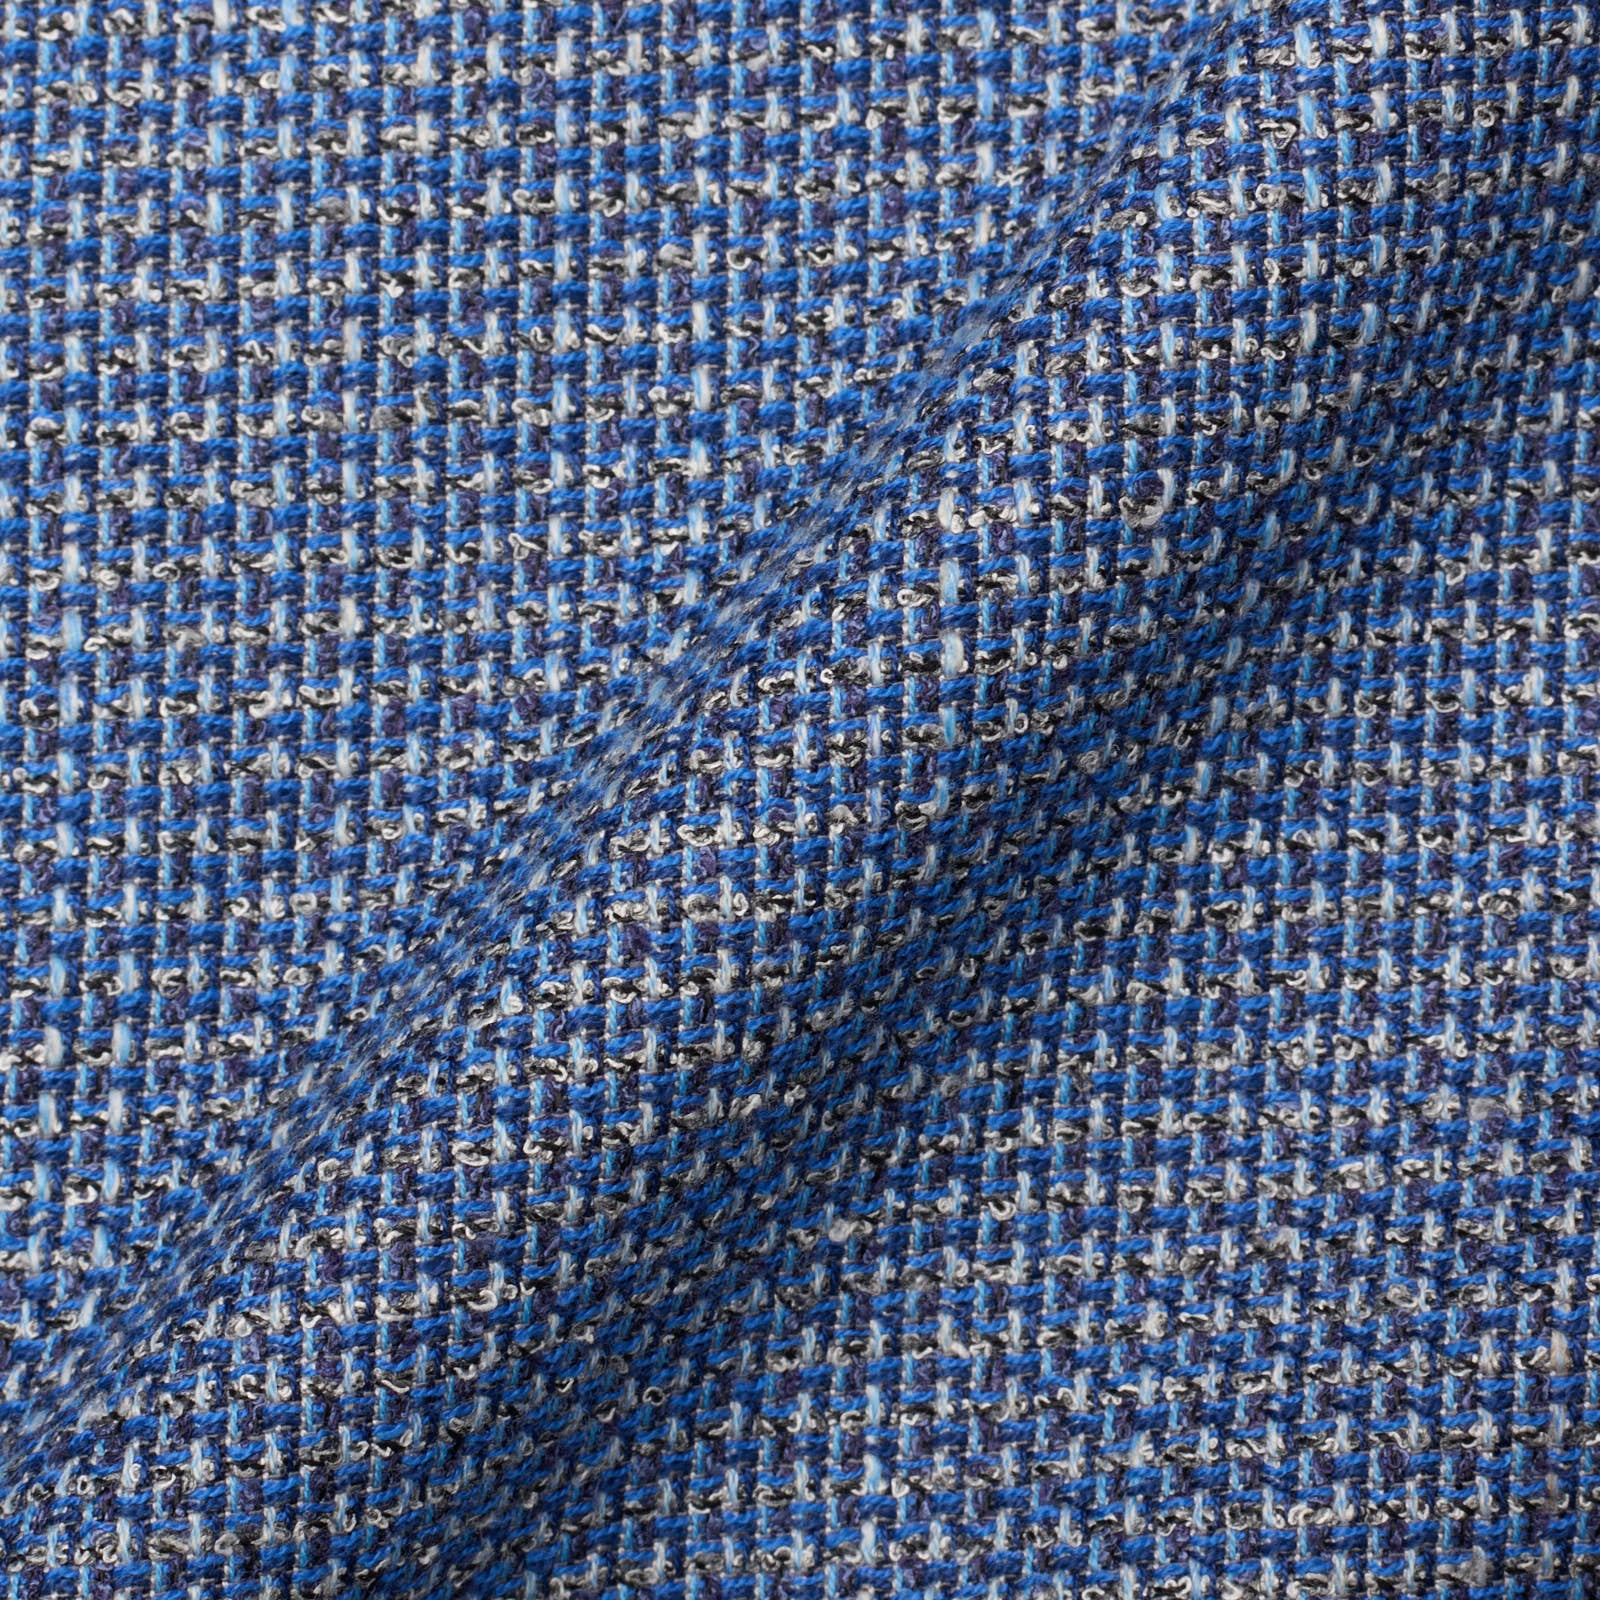 SARTORIA PARTENOPEA Blue Micro Pattern Cotton Jacket EU 52 NEW US 42 Current Model